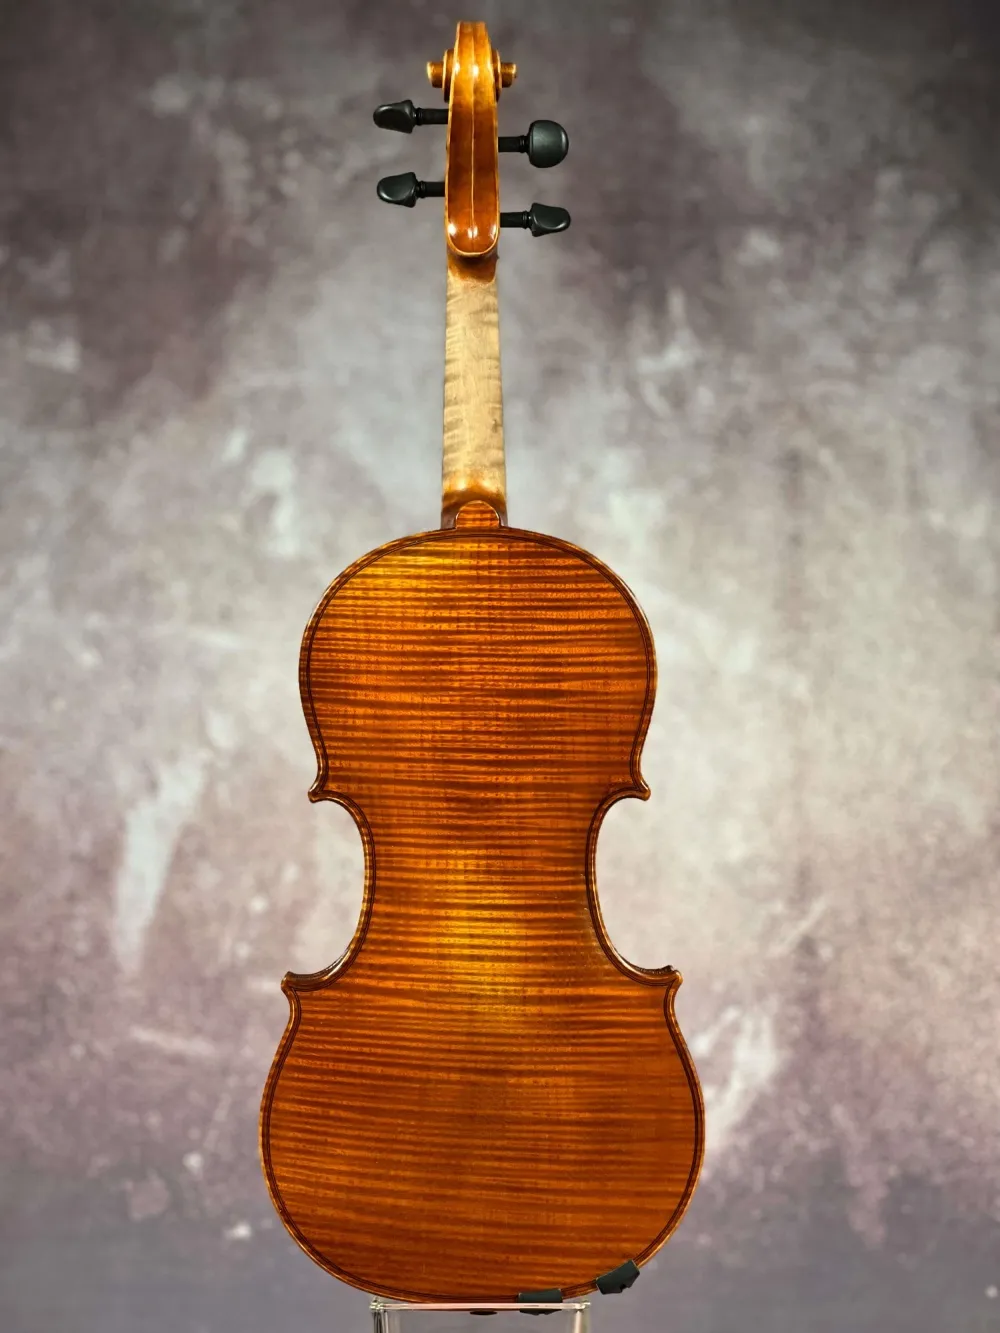 Nagy Károly 4/4 "di Bottega" Geige (Violine) Handarbeit aus RO